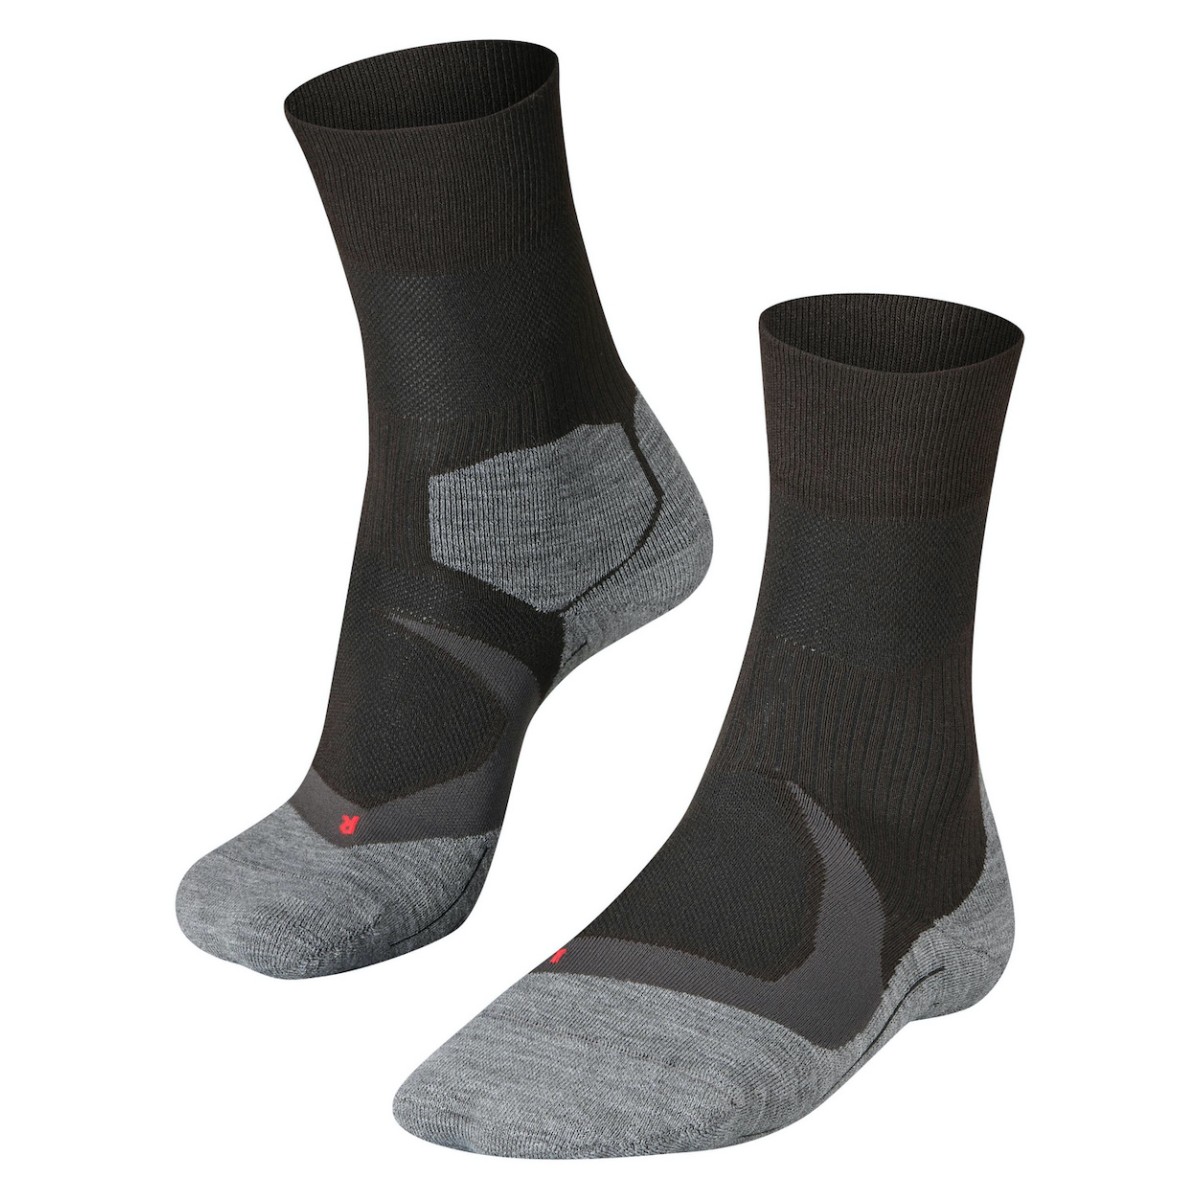 FALKE RU4 COOL socks - black/grey